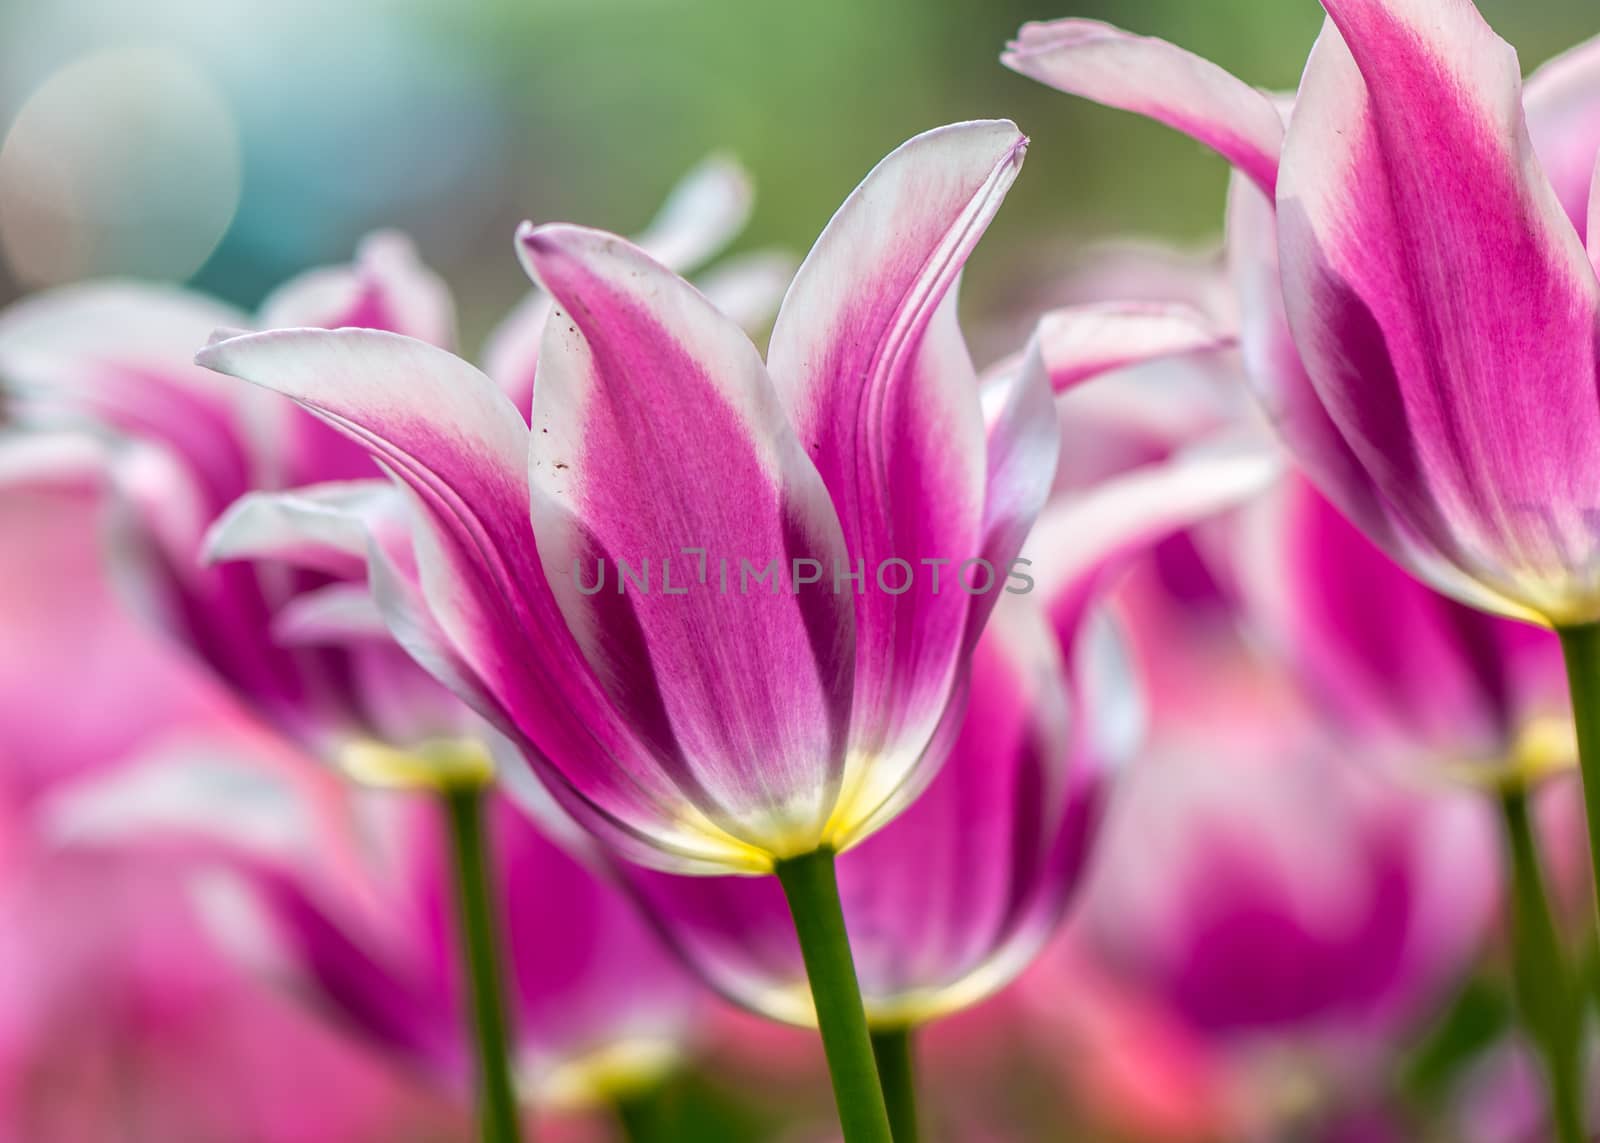 The pink tulip in spring time at Beijing Botanical Garden.